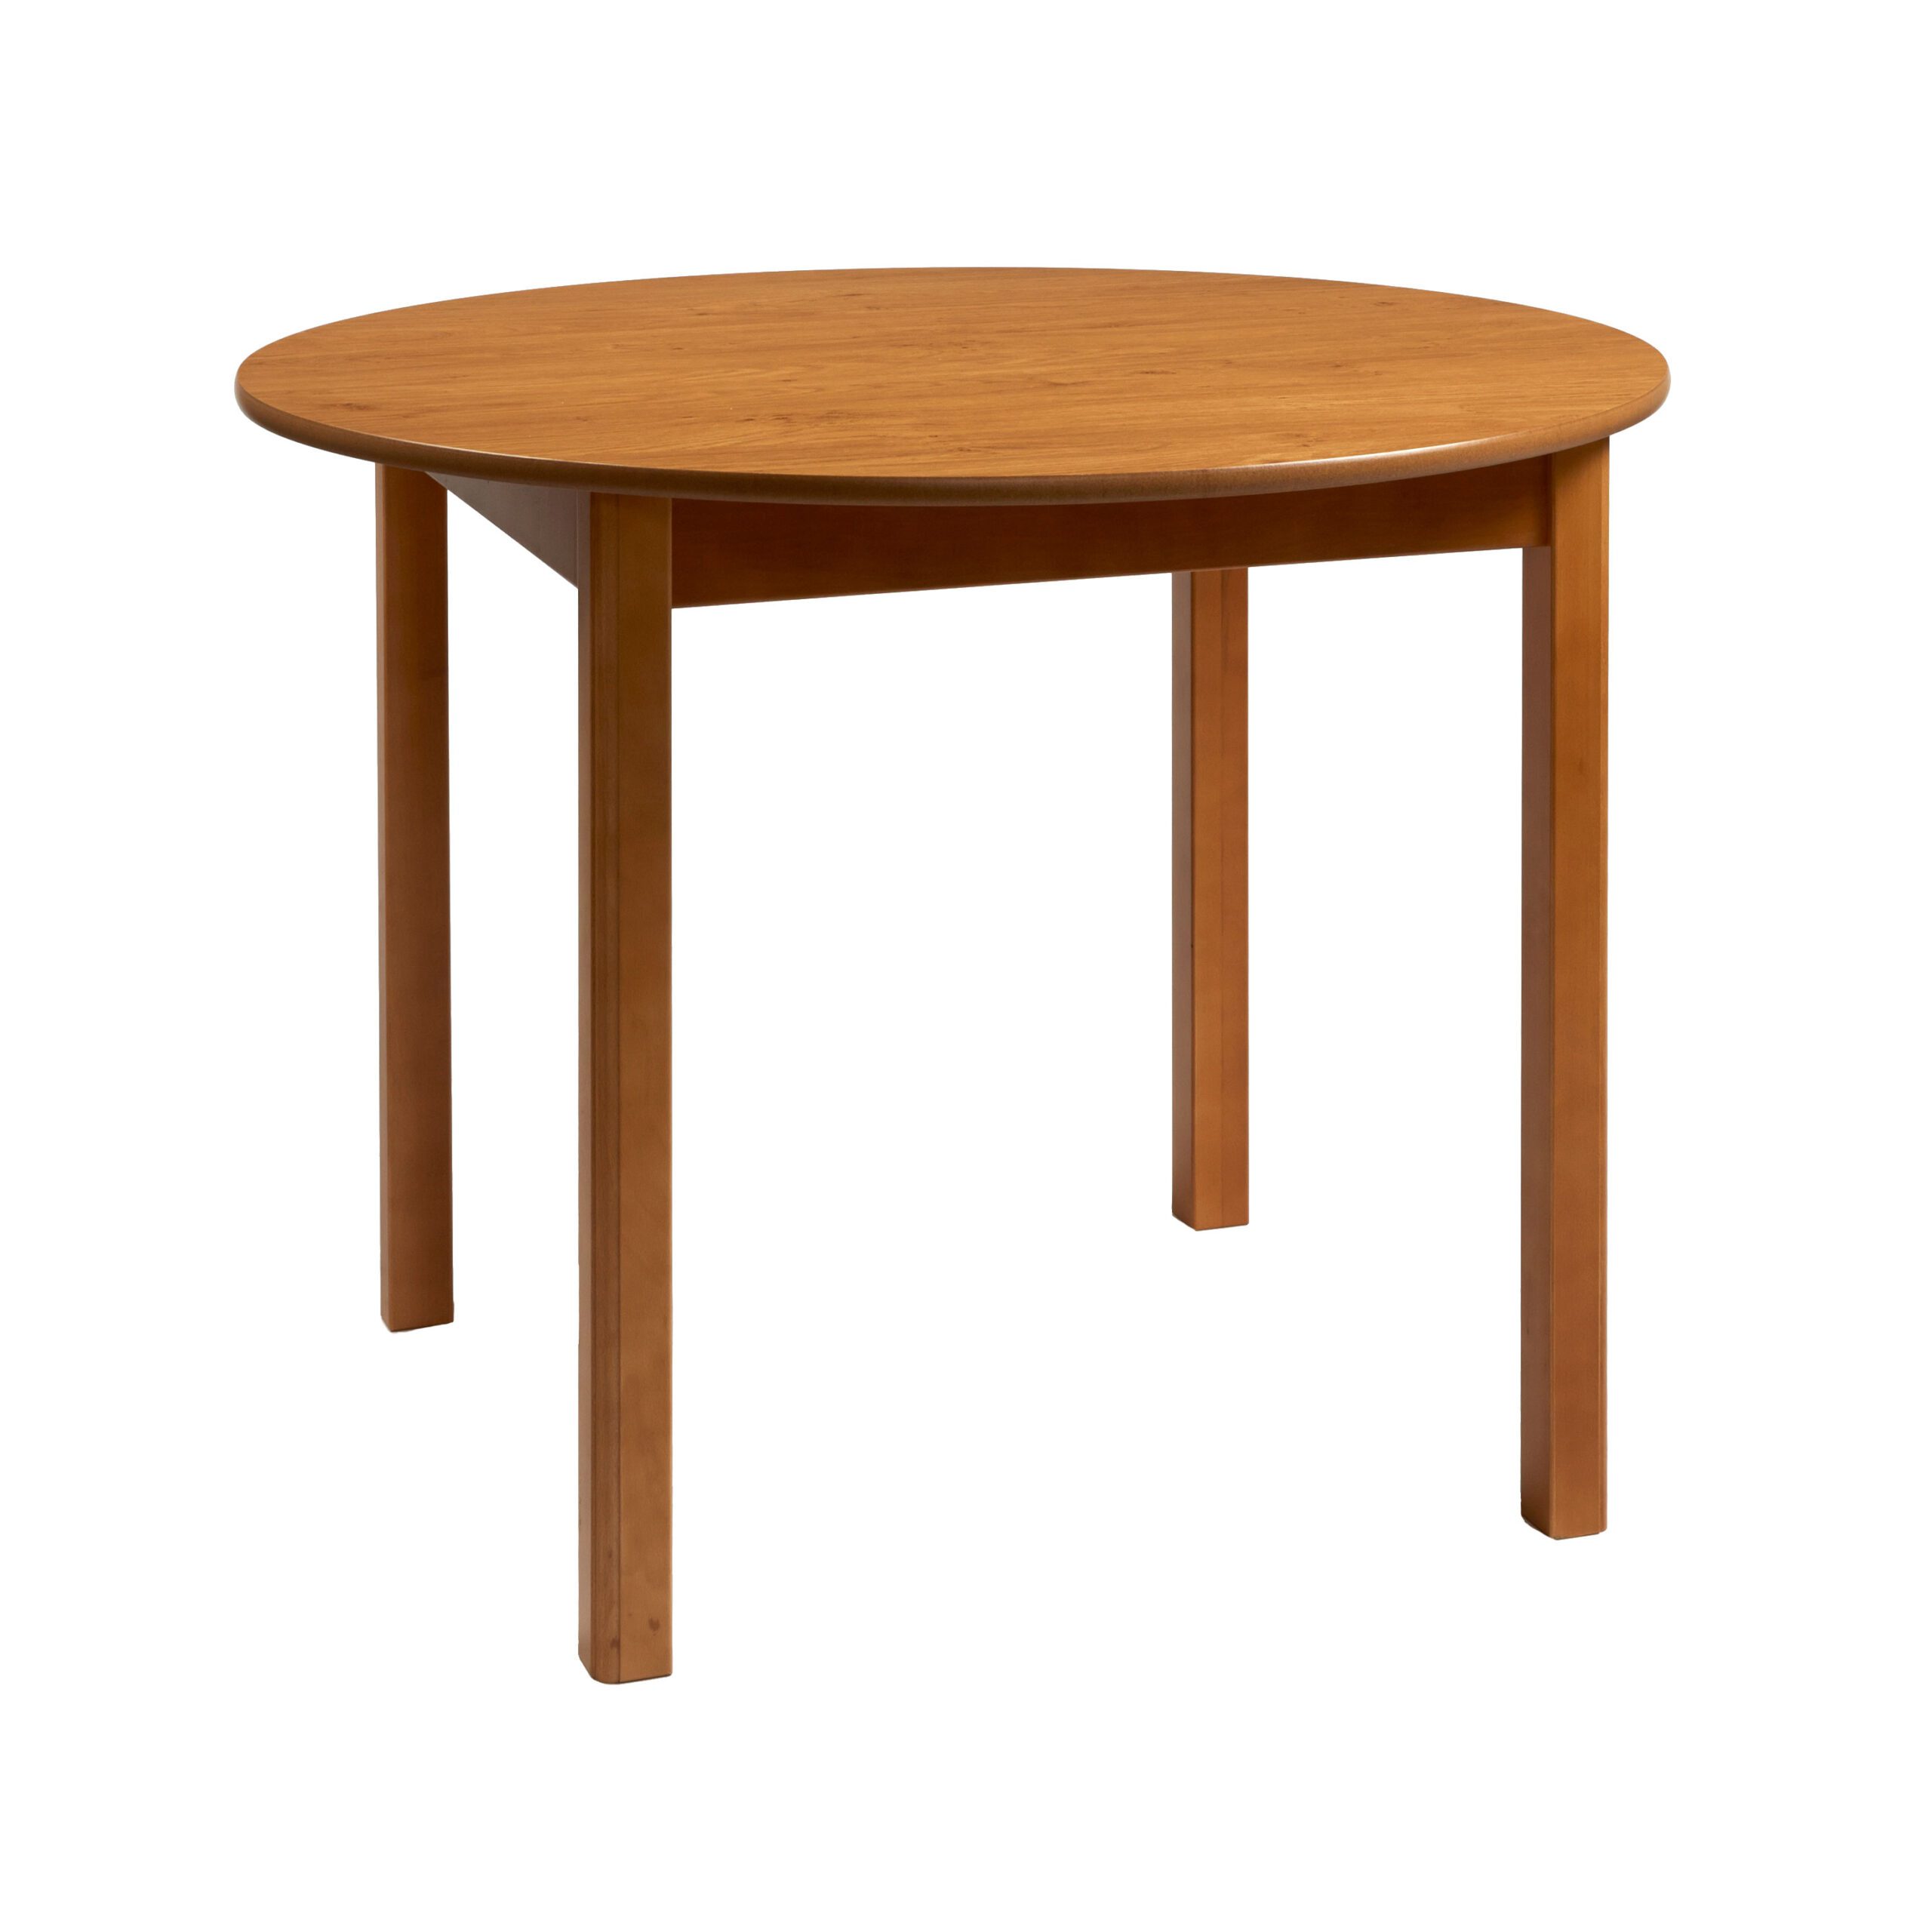 Earlwood Circular 4 Seater Dining Table - oak